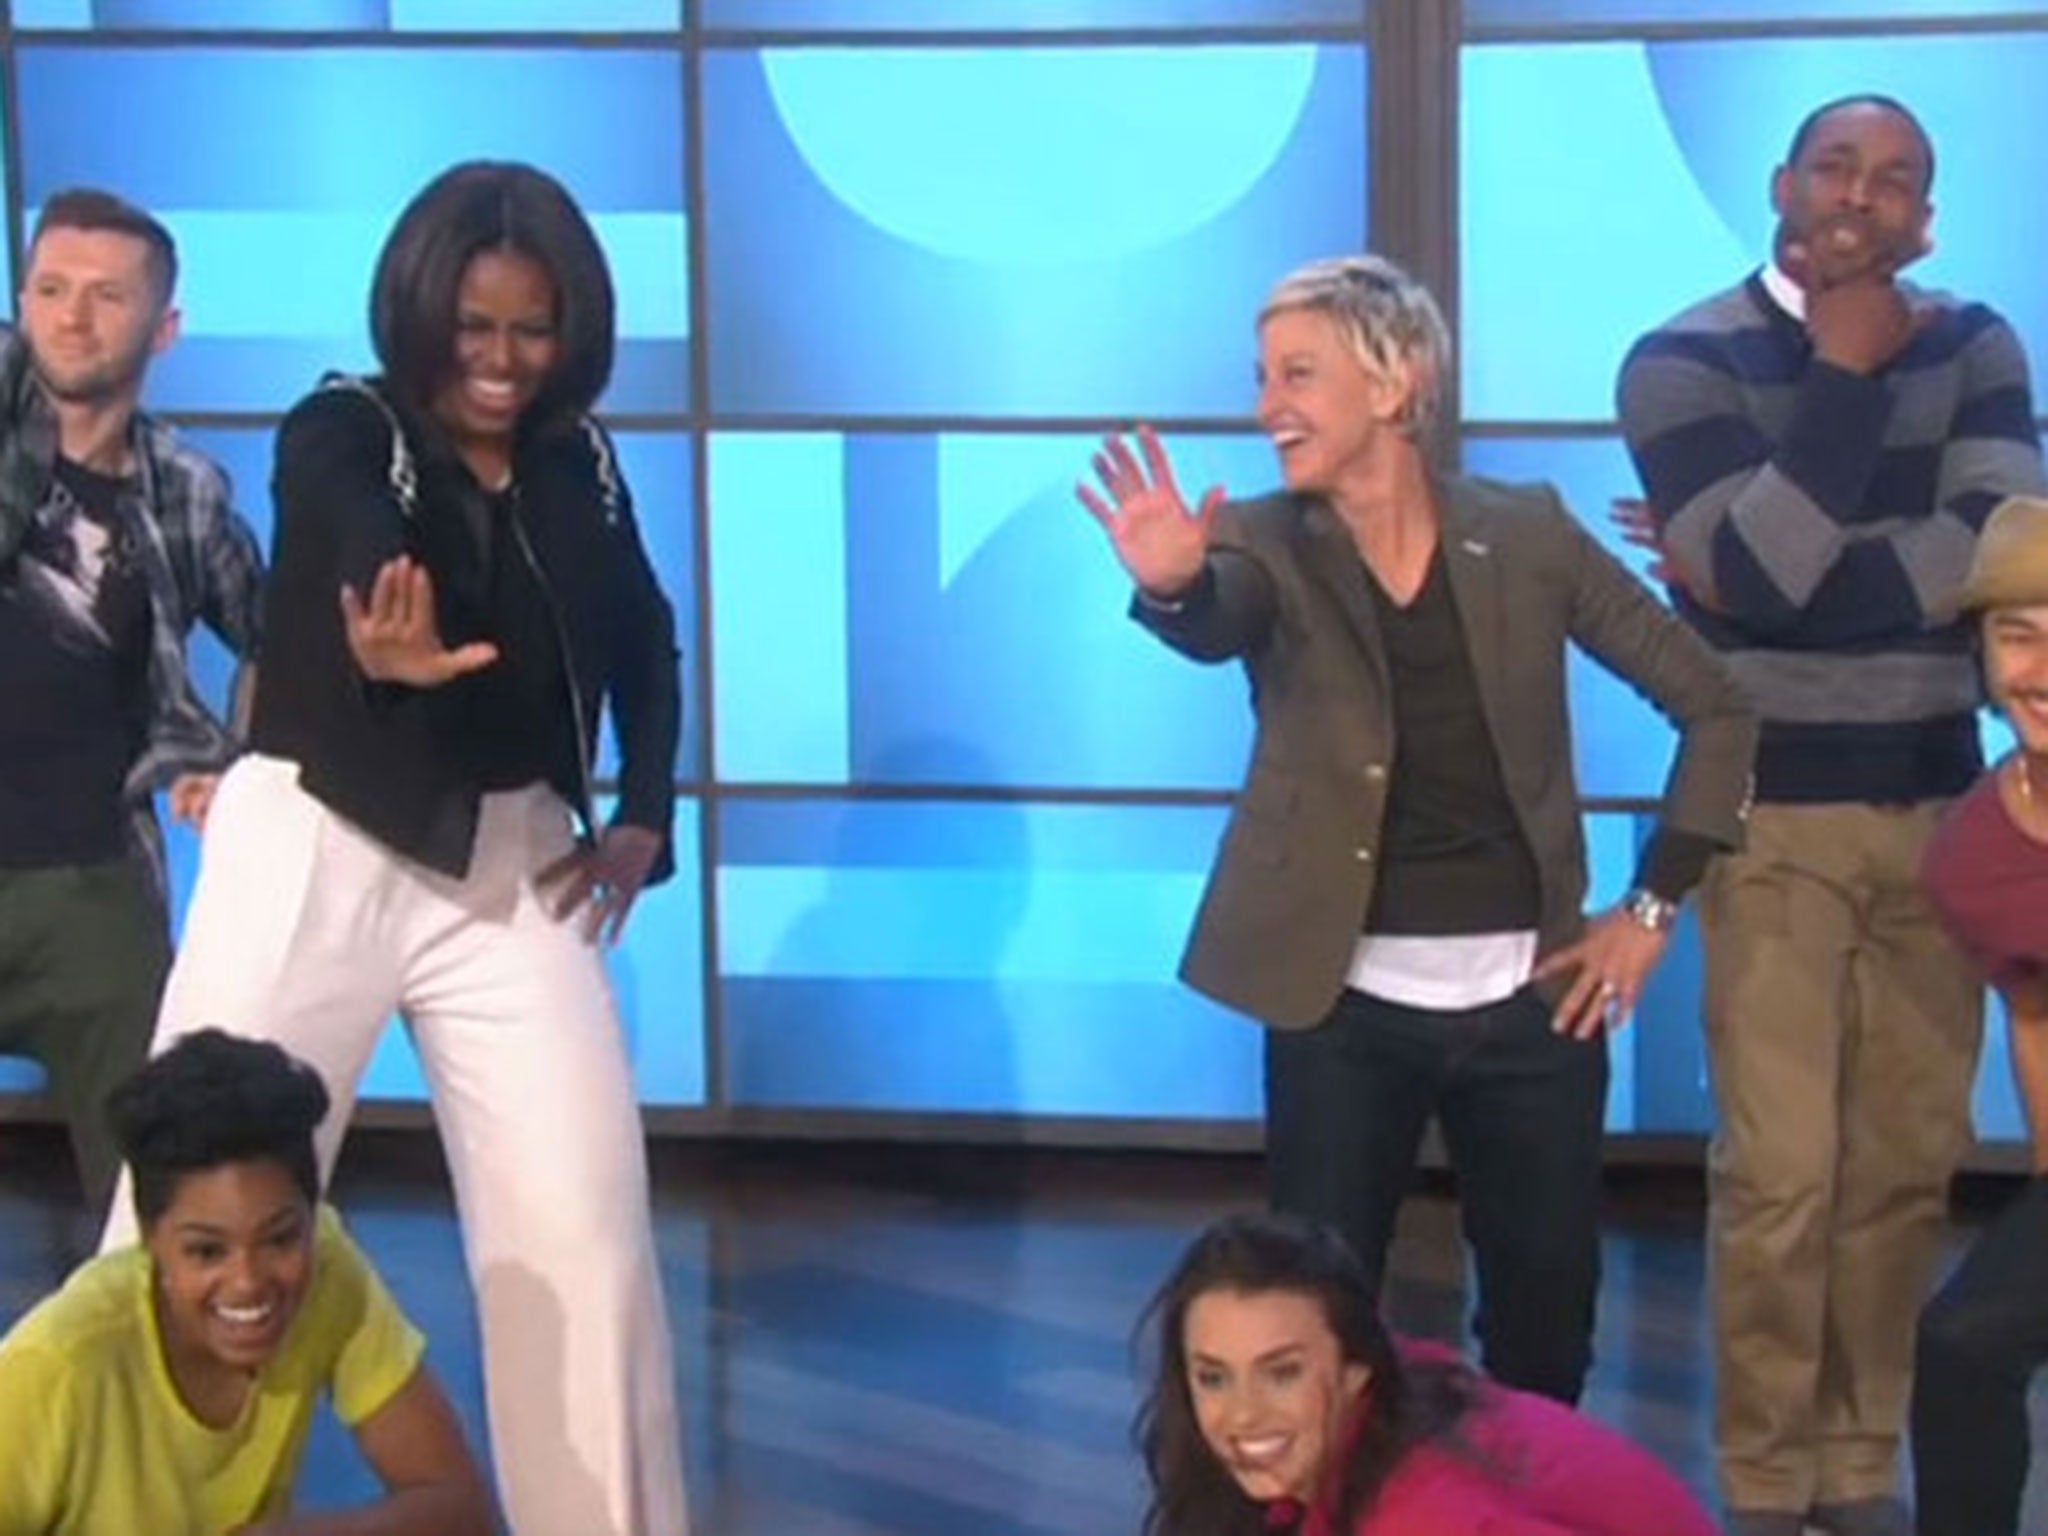 Ellen and Michelle dance to 'Uptown Funk'